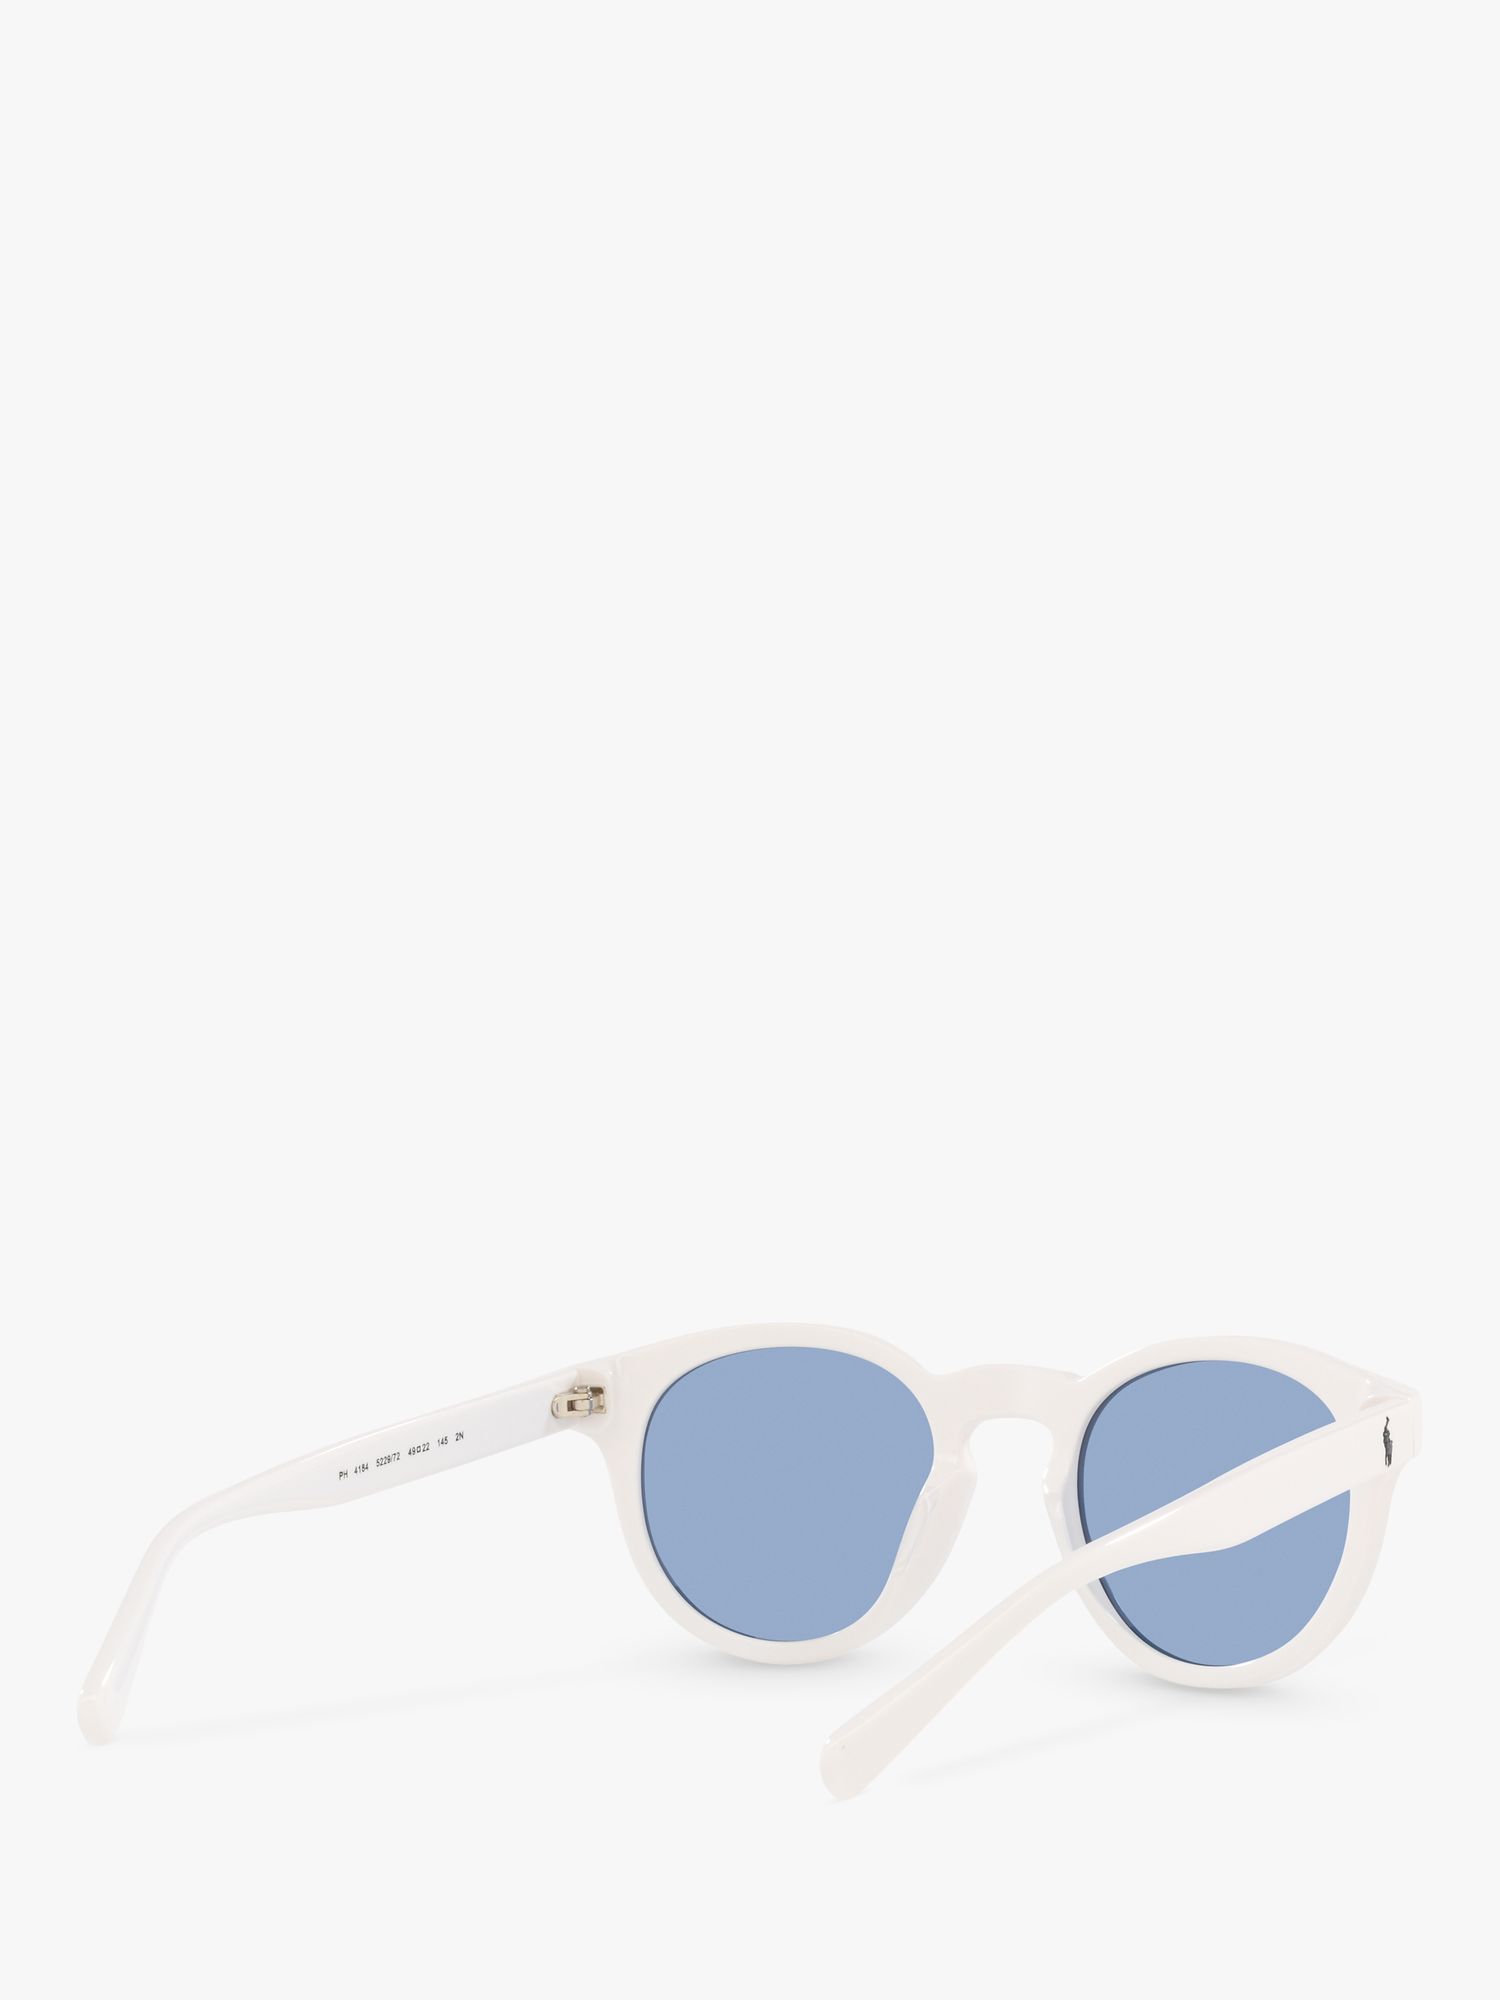 Ralph PH4184 Men's Round Shape Sunglasses, Shiny White/Blue